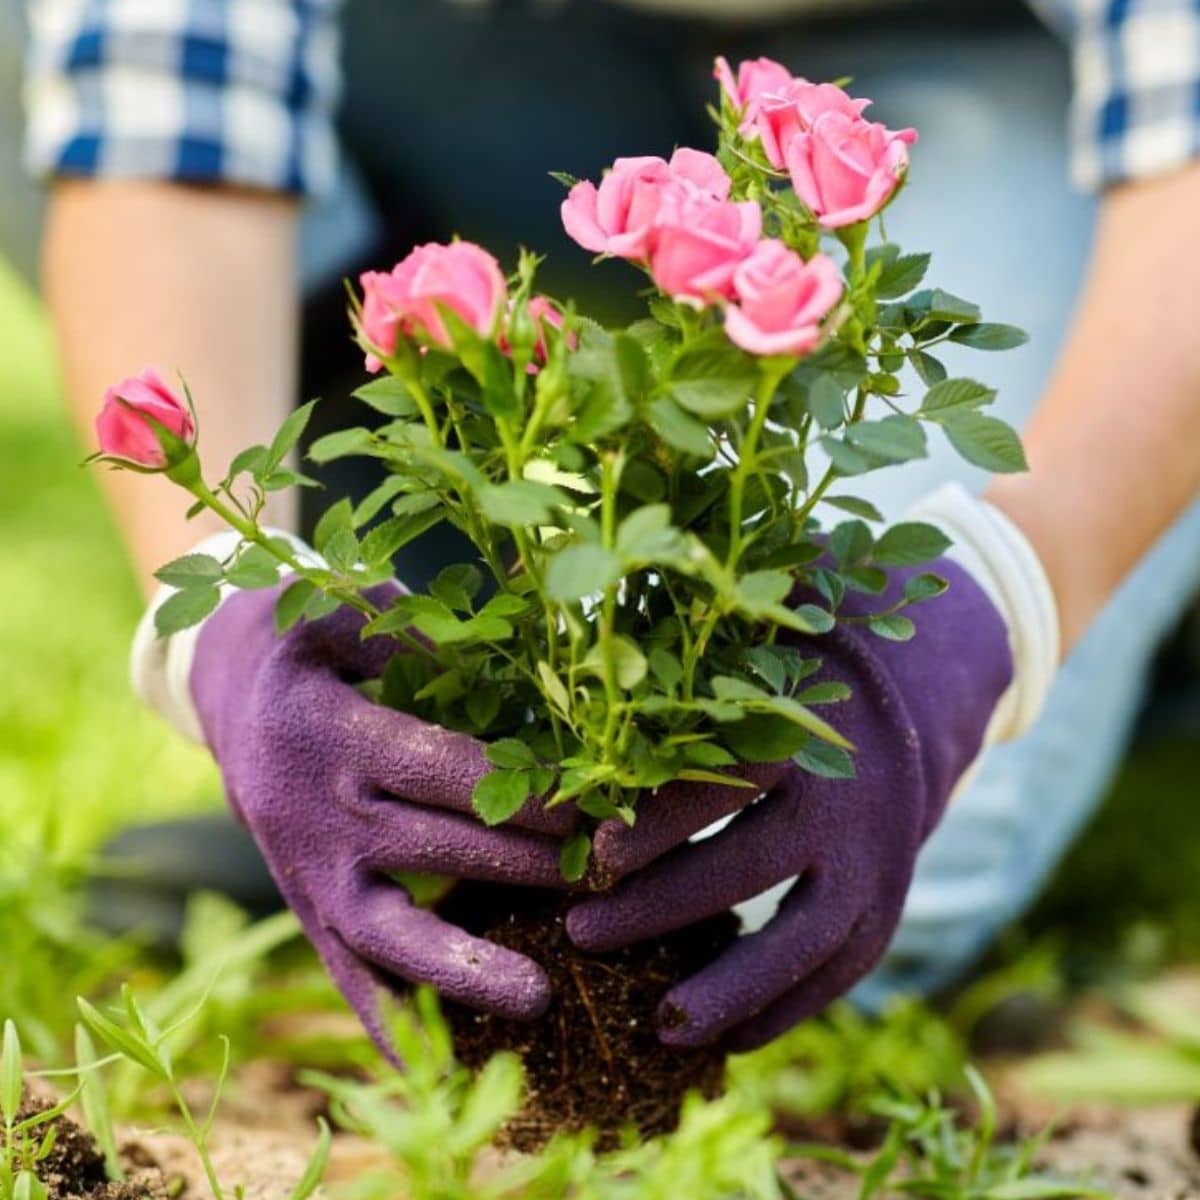 A gardener planting a pink rose bush in the garden.